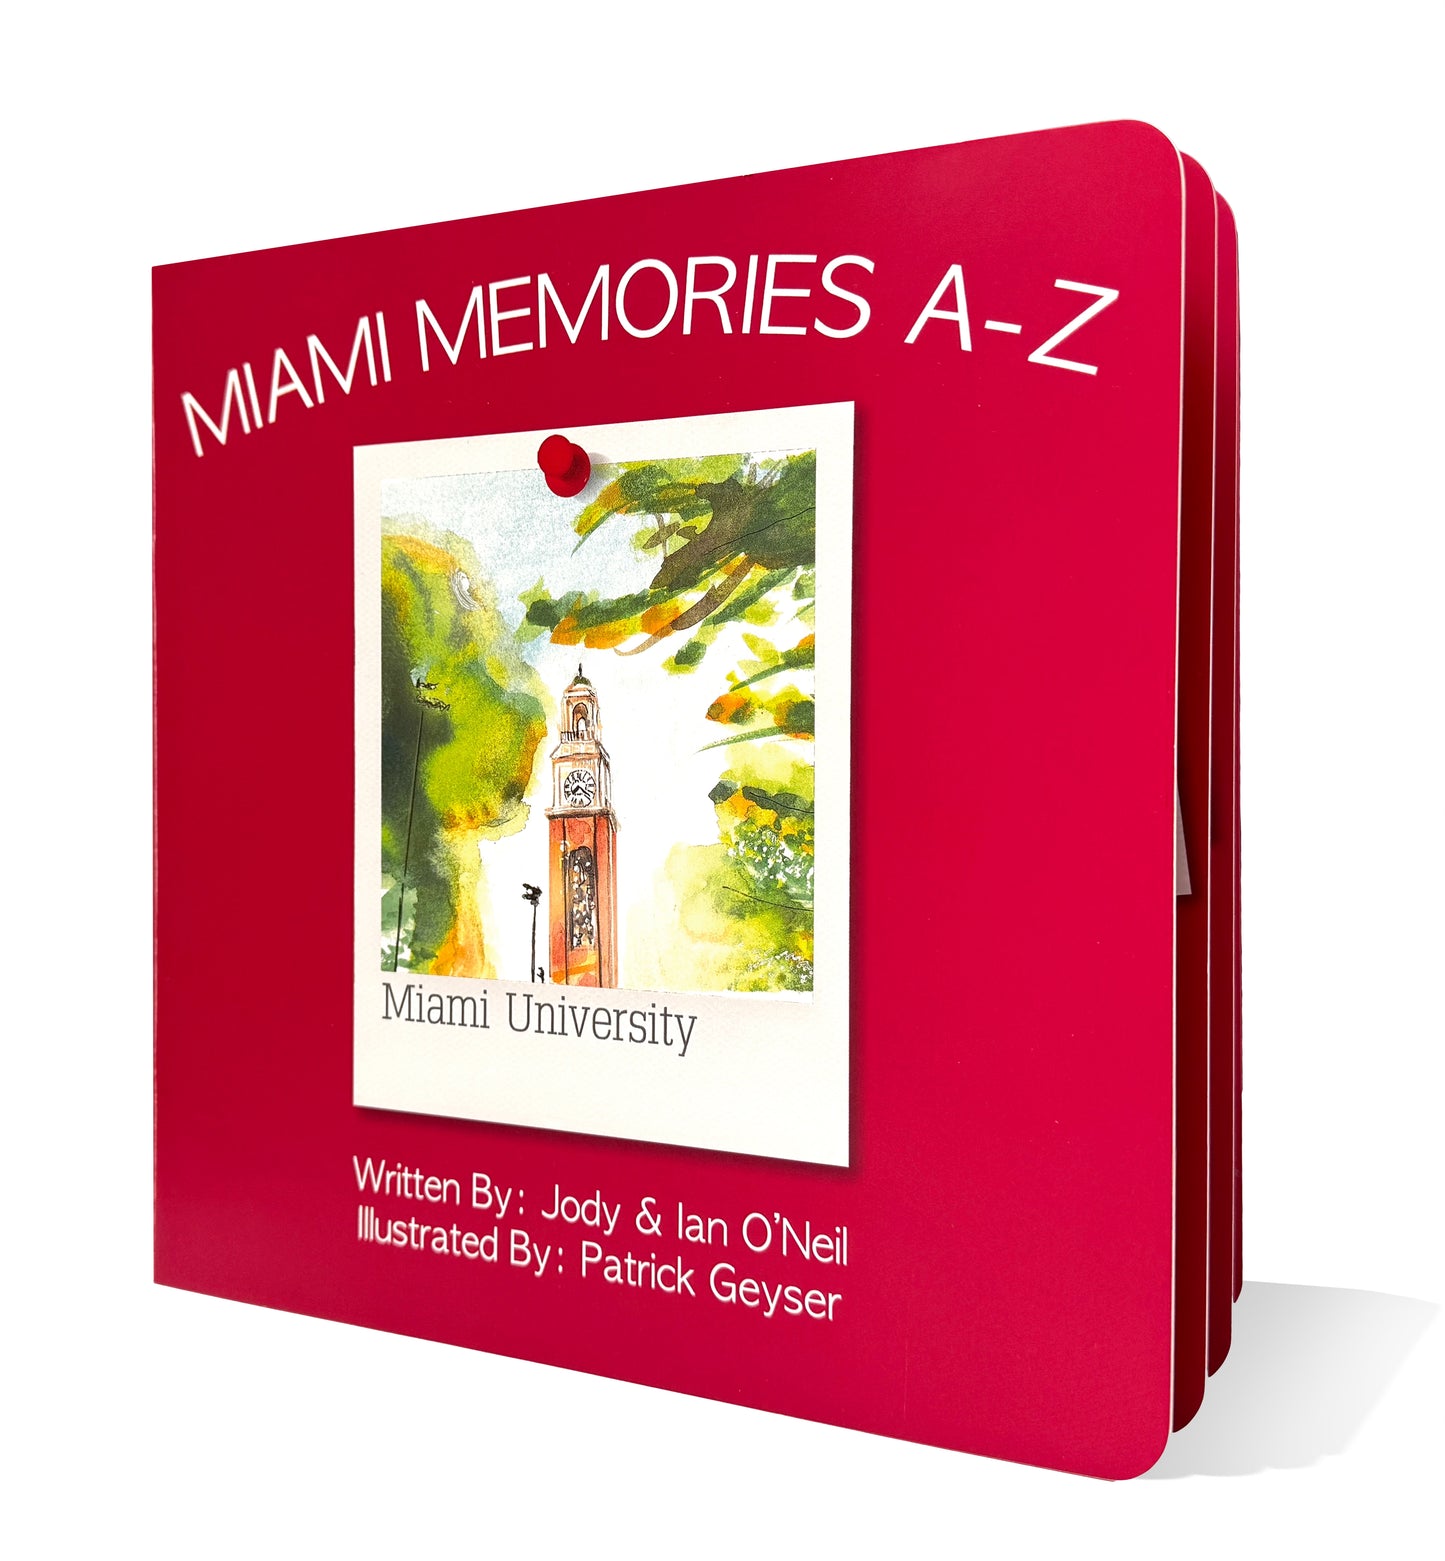 Purchase Here: Miami Memories A-Z